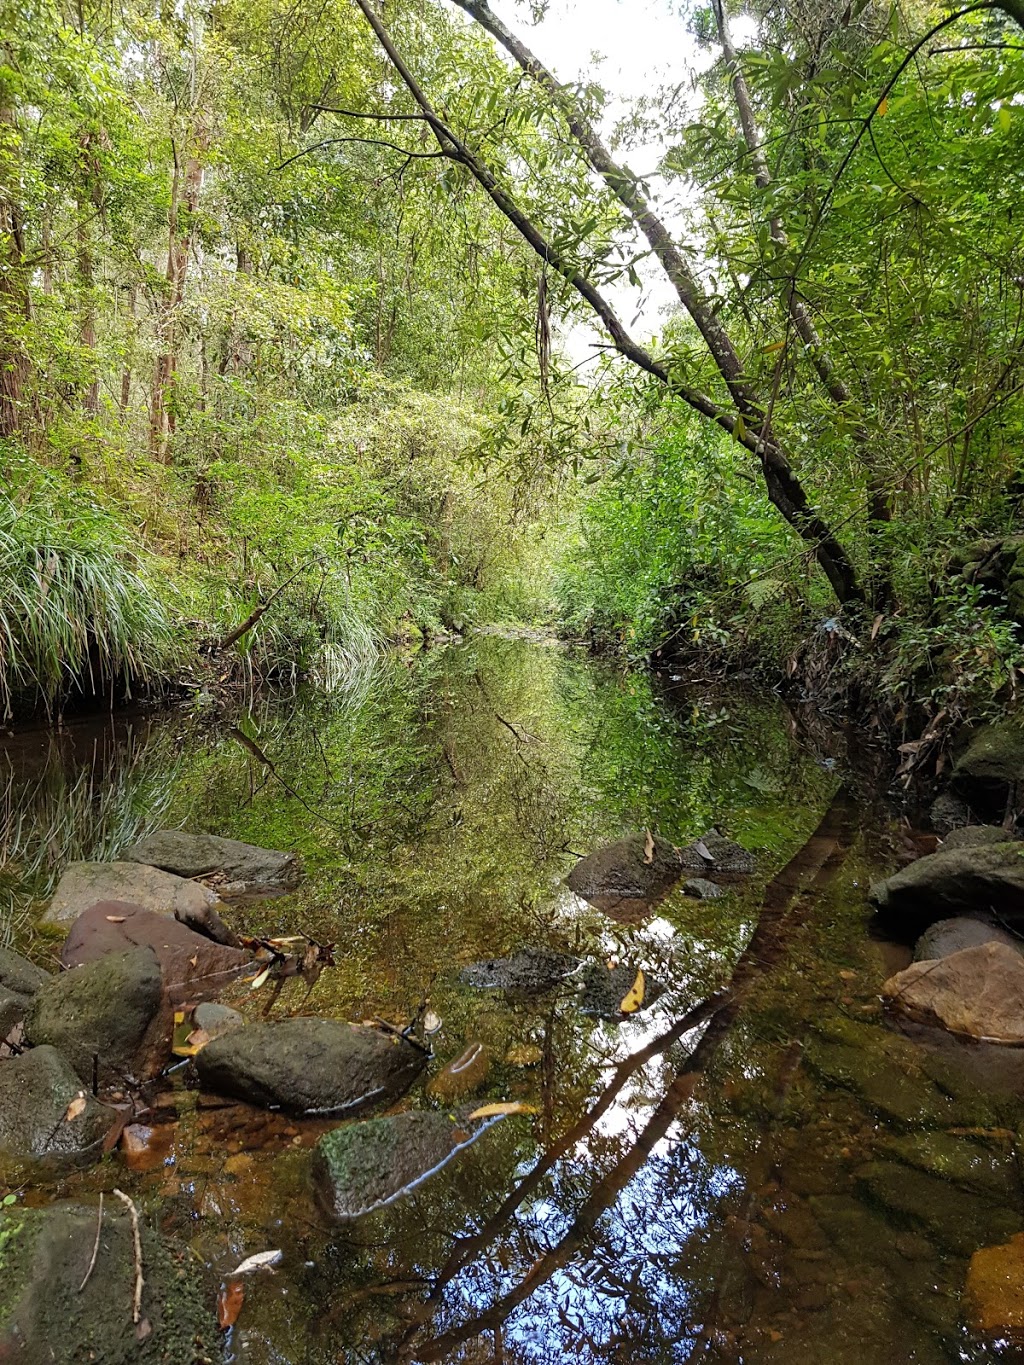 Bidjigal Reserve - Platypus Track | Castle Hill NSW 2154, Australia